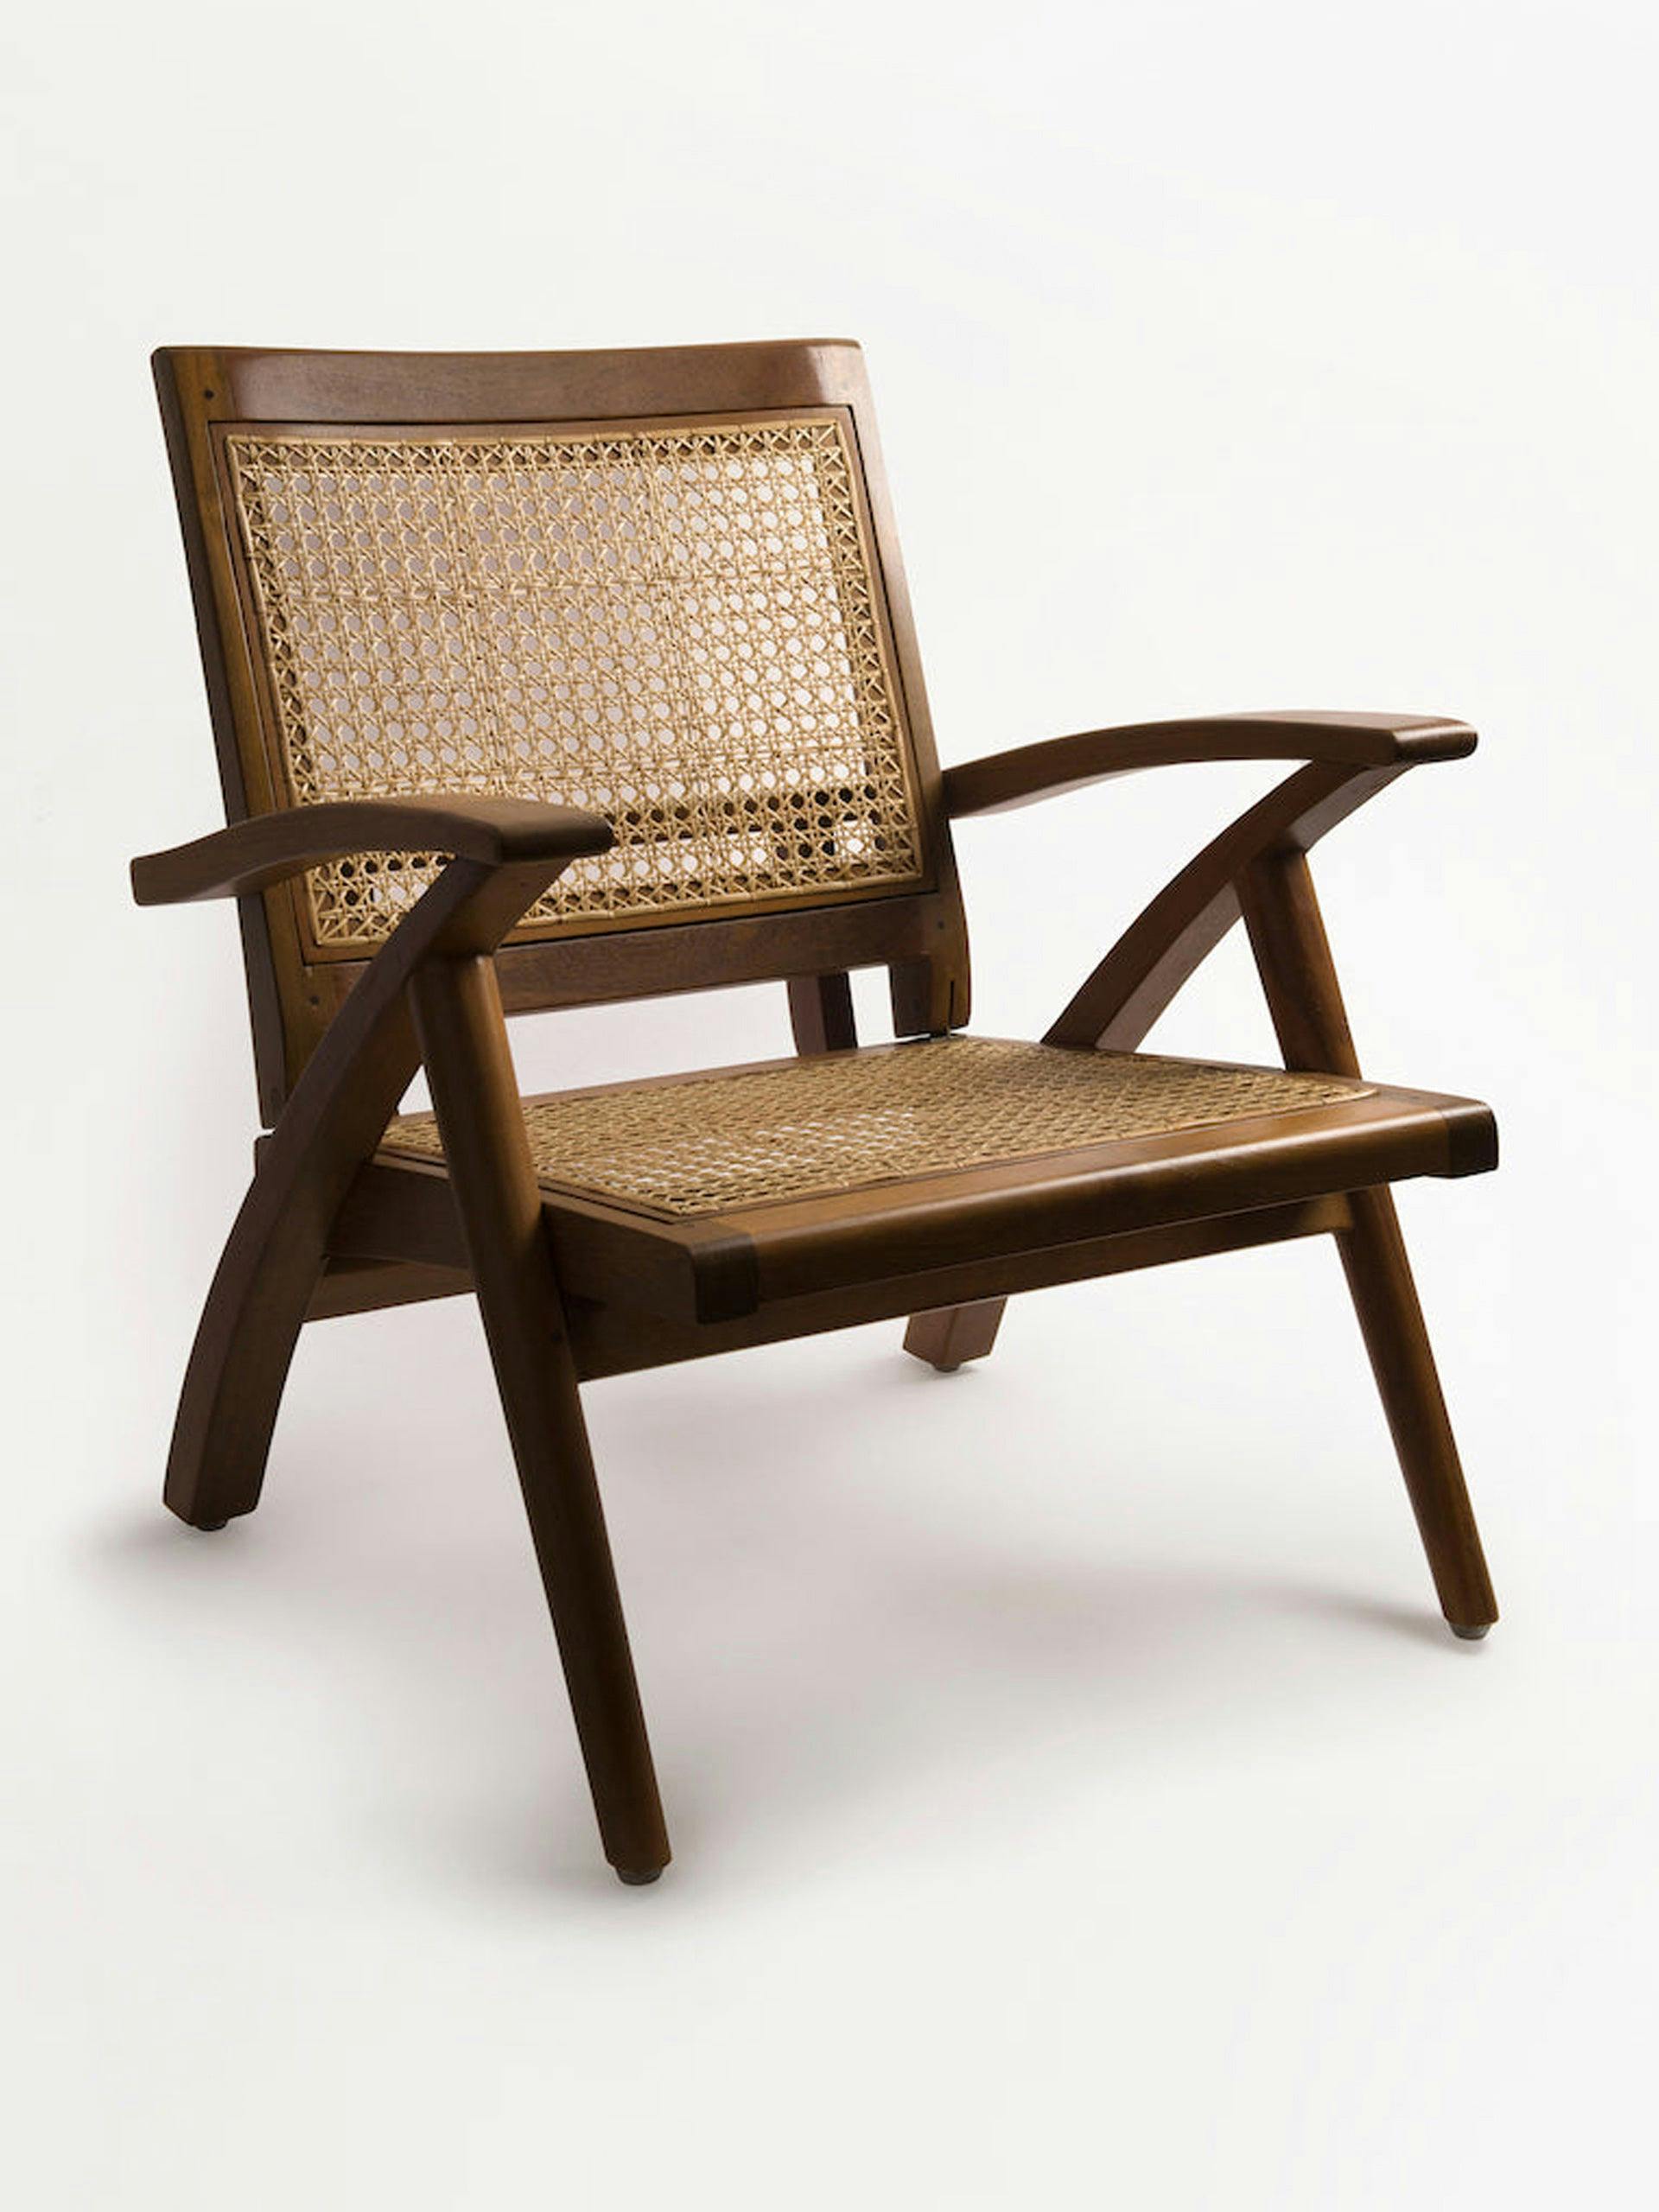 Rangoon folding teak cane chair